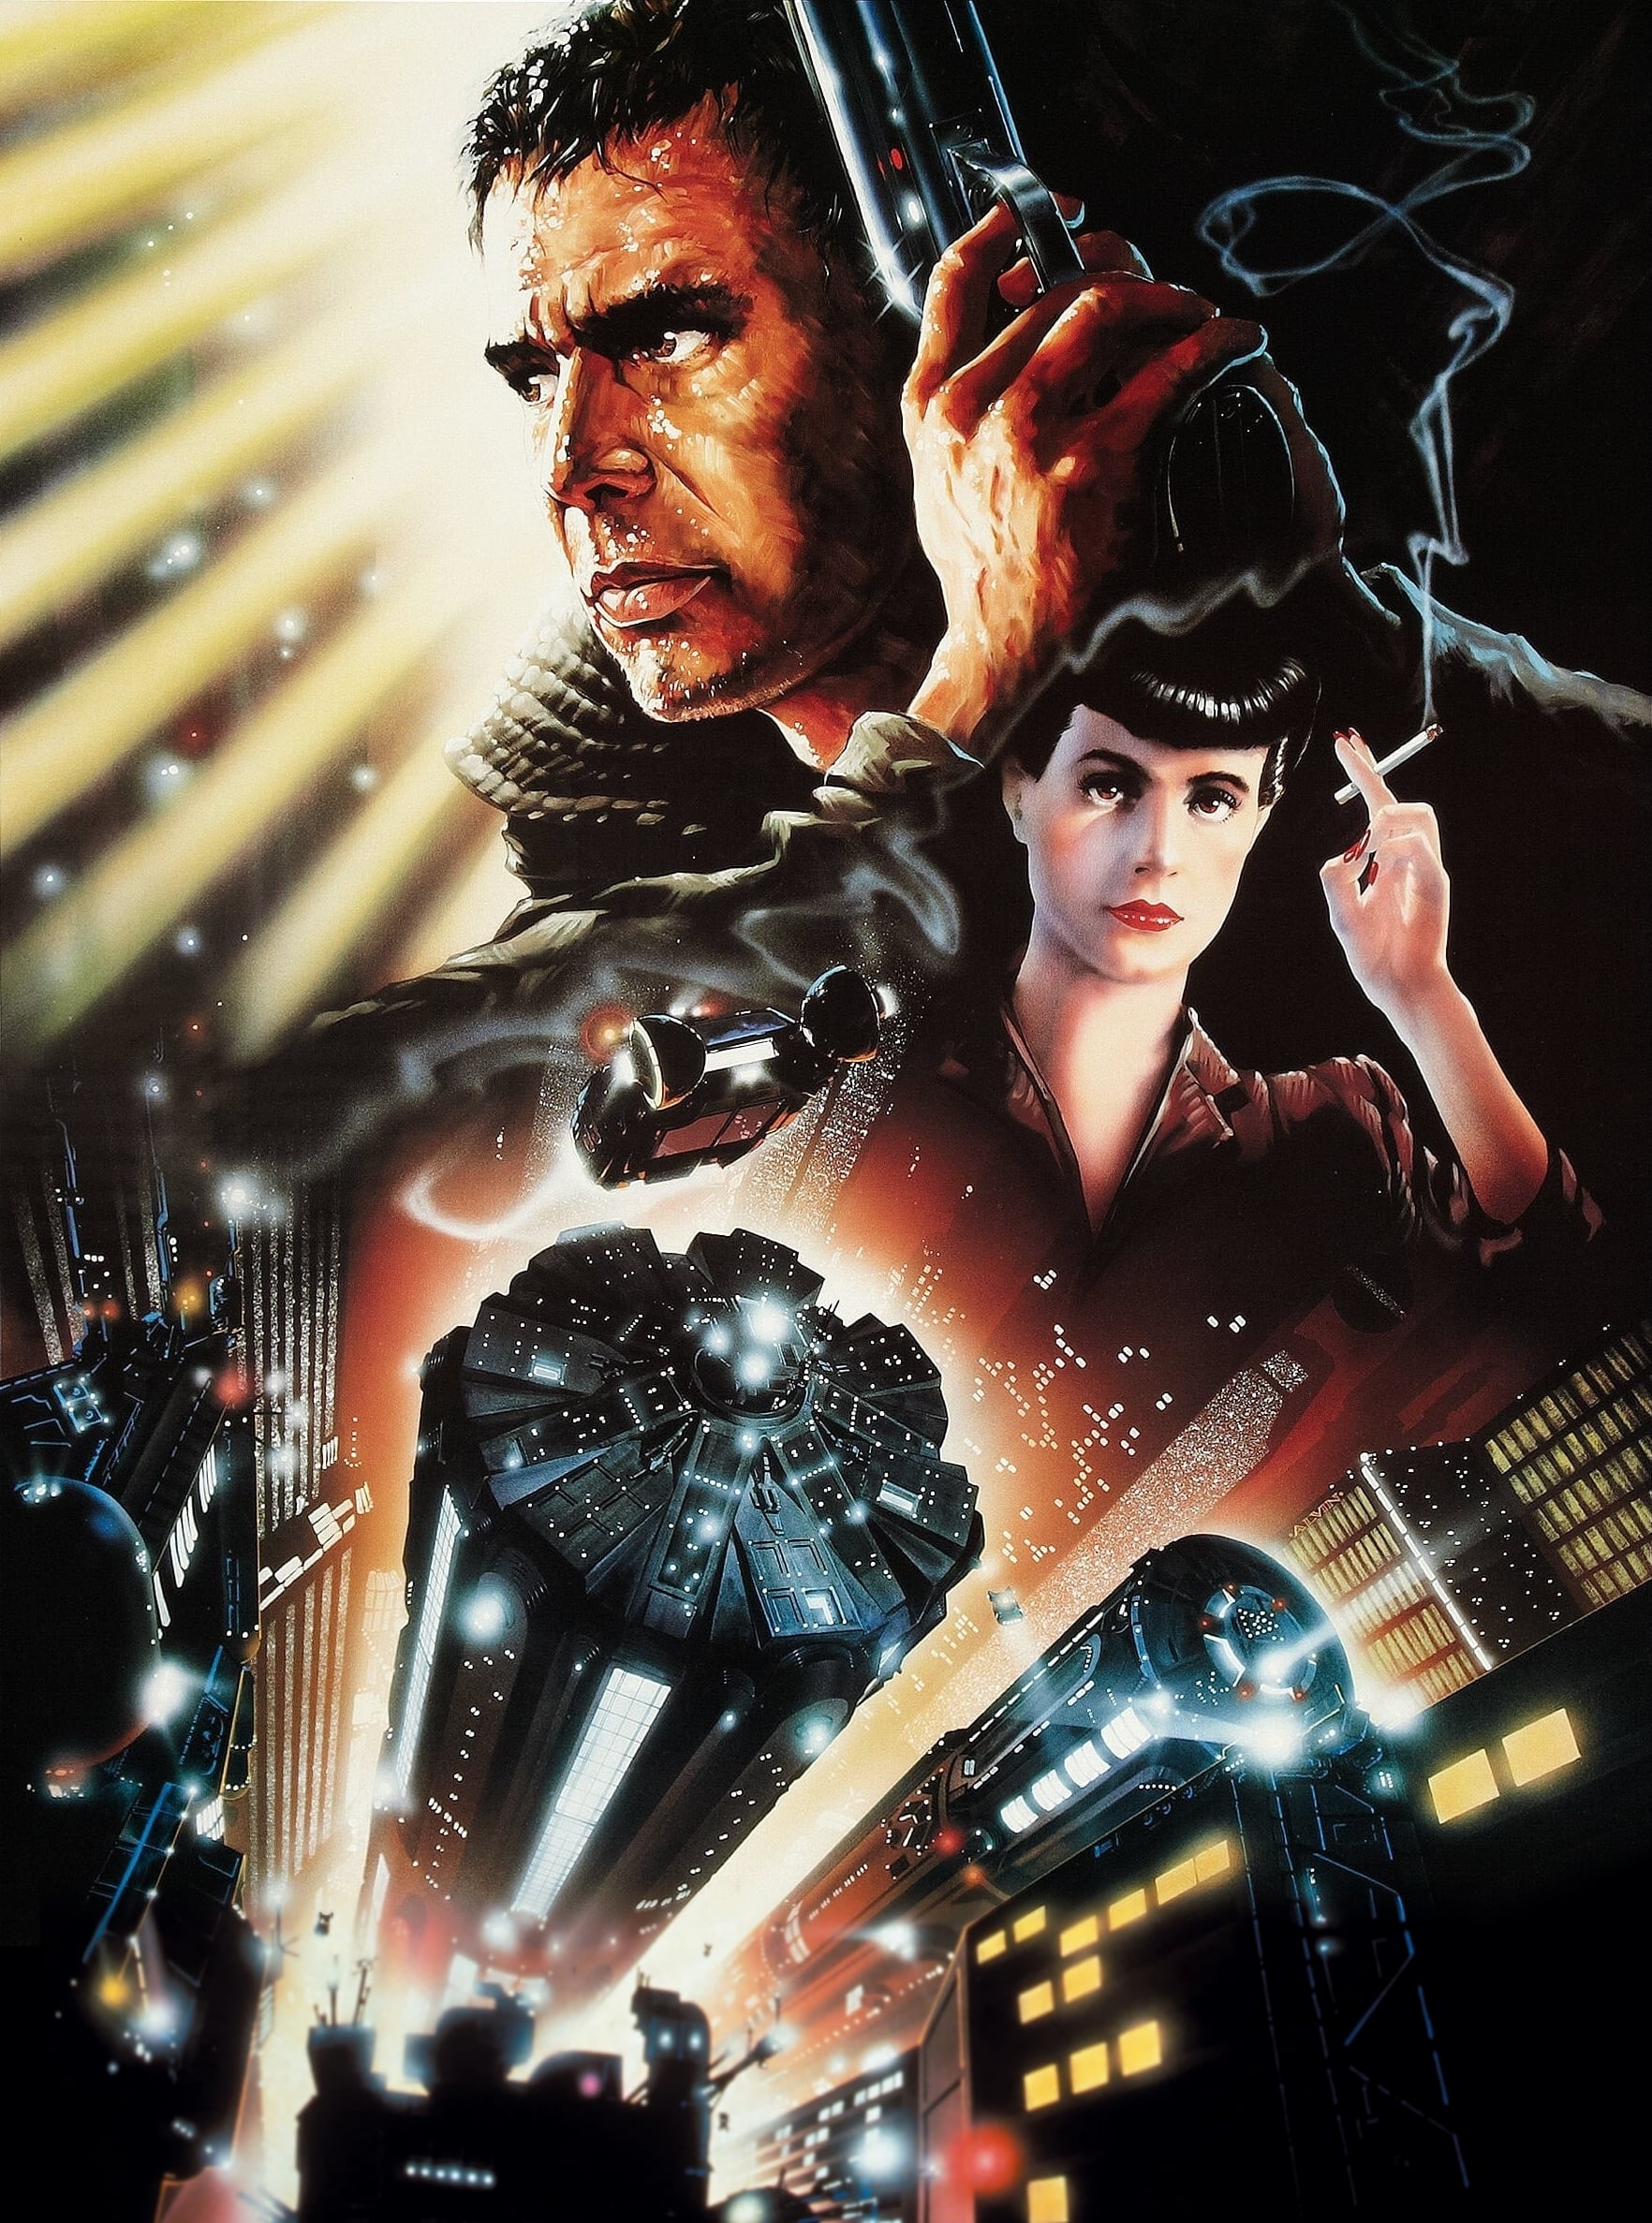 بلید رانر (Blade Runner)